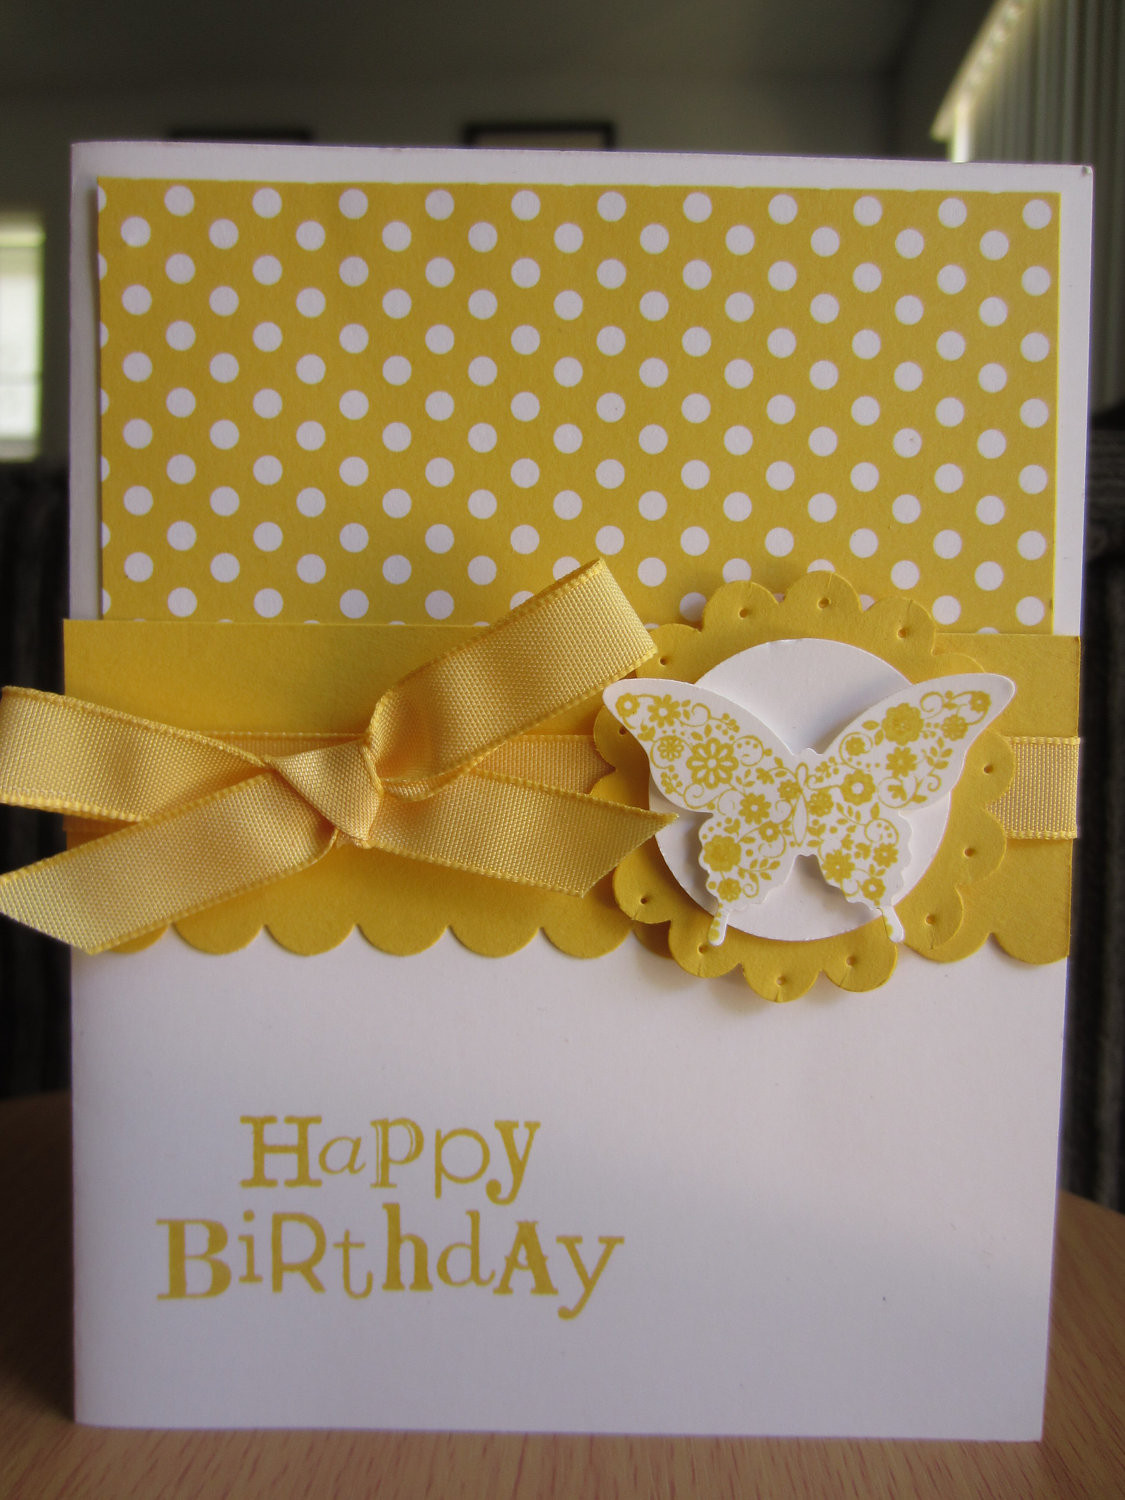 Stampin Up Birthday Cards
 Ballerina Happy Birthday Card Paper Handmade by